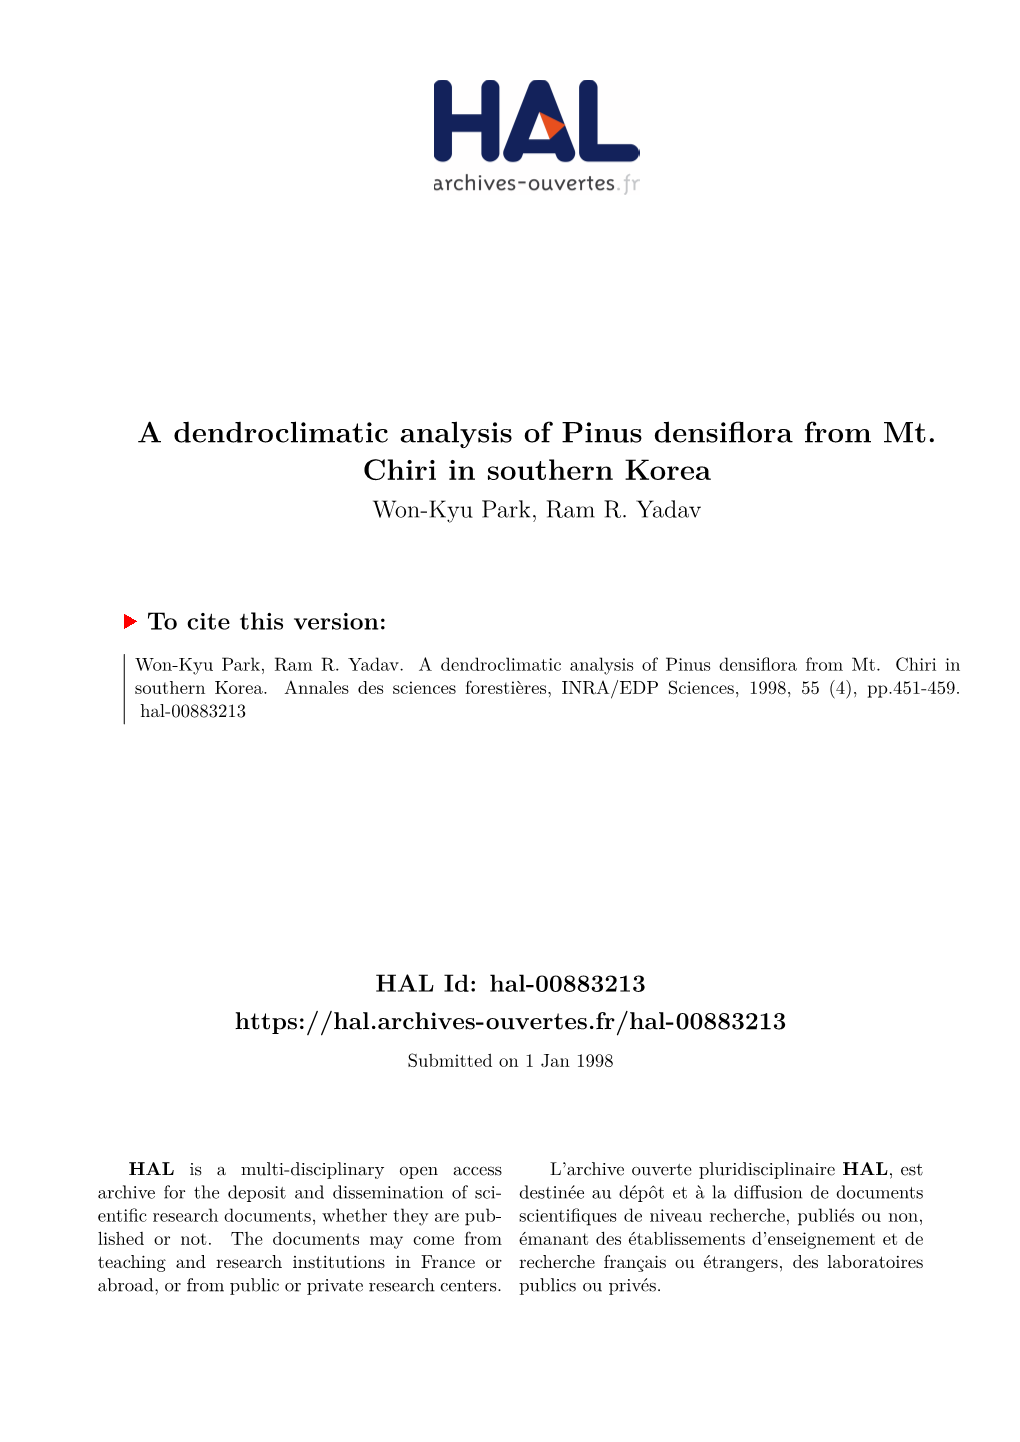 A Dendroclimatic Analysis of Pinus Densiflora from Mt. Chiri in Southern Korea Won-Kyu Park, Ram R